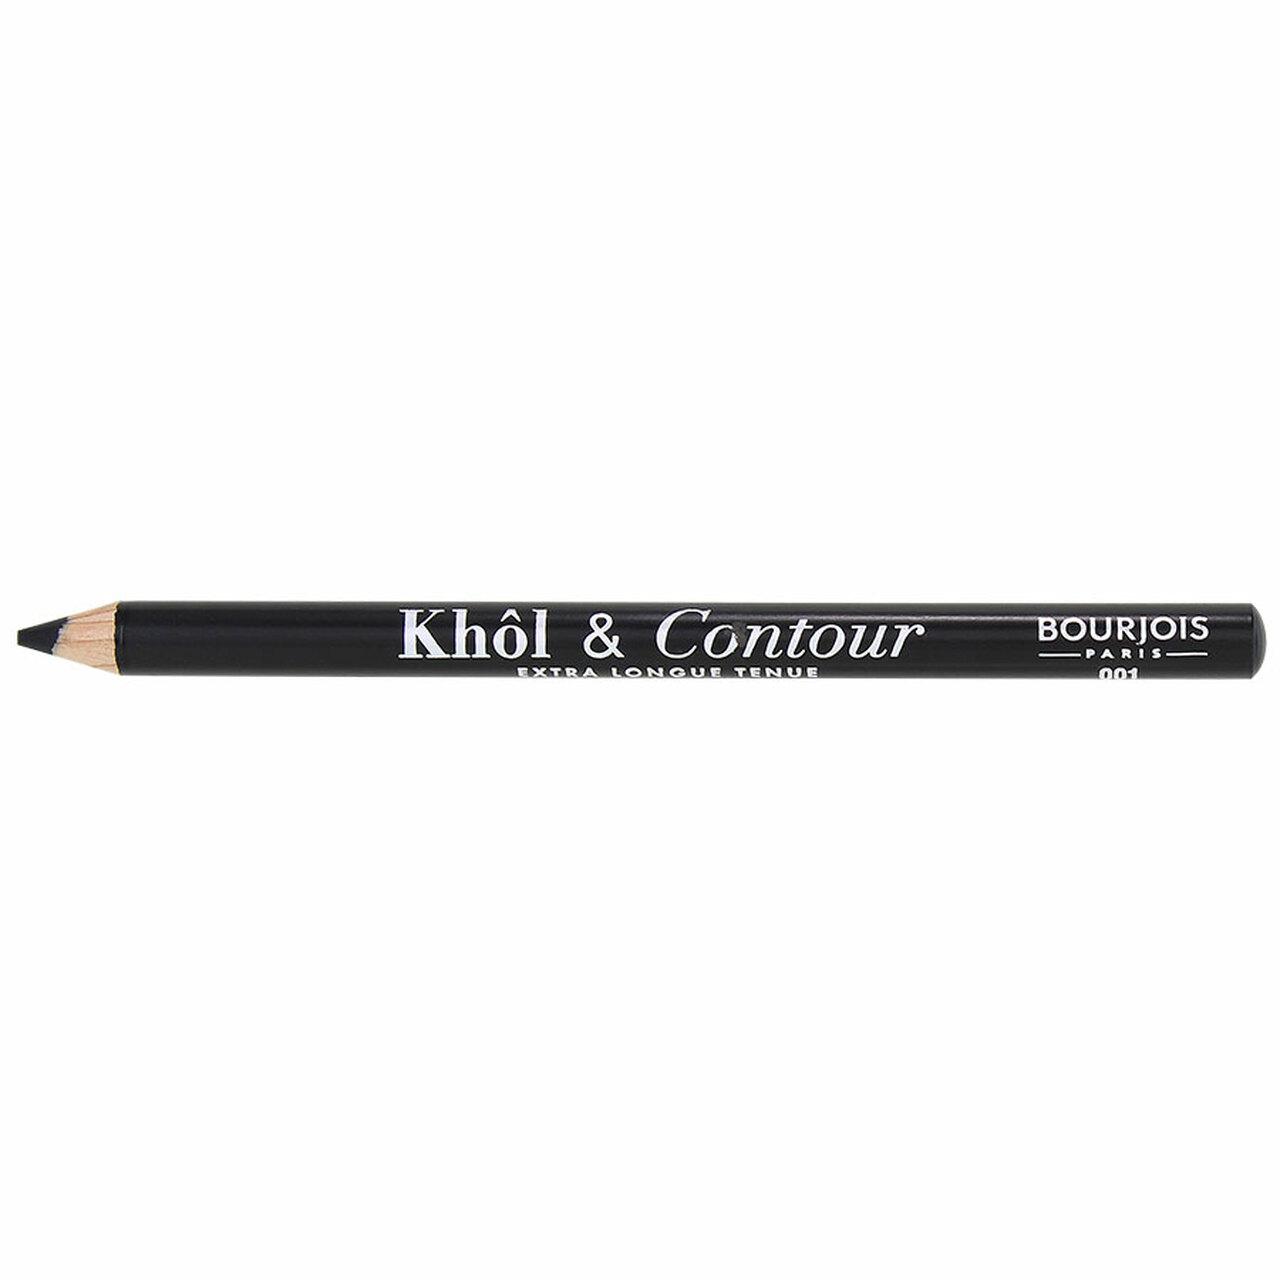 BOURJOIS Bourjois Khol & Contour Extra-Long Wear Олівець для очей 003